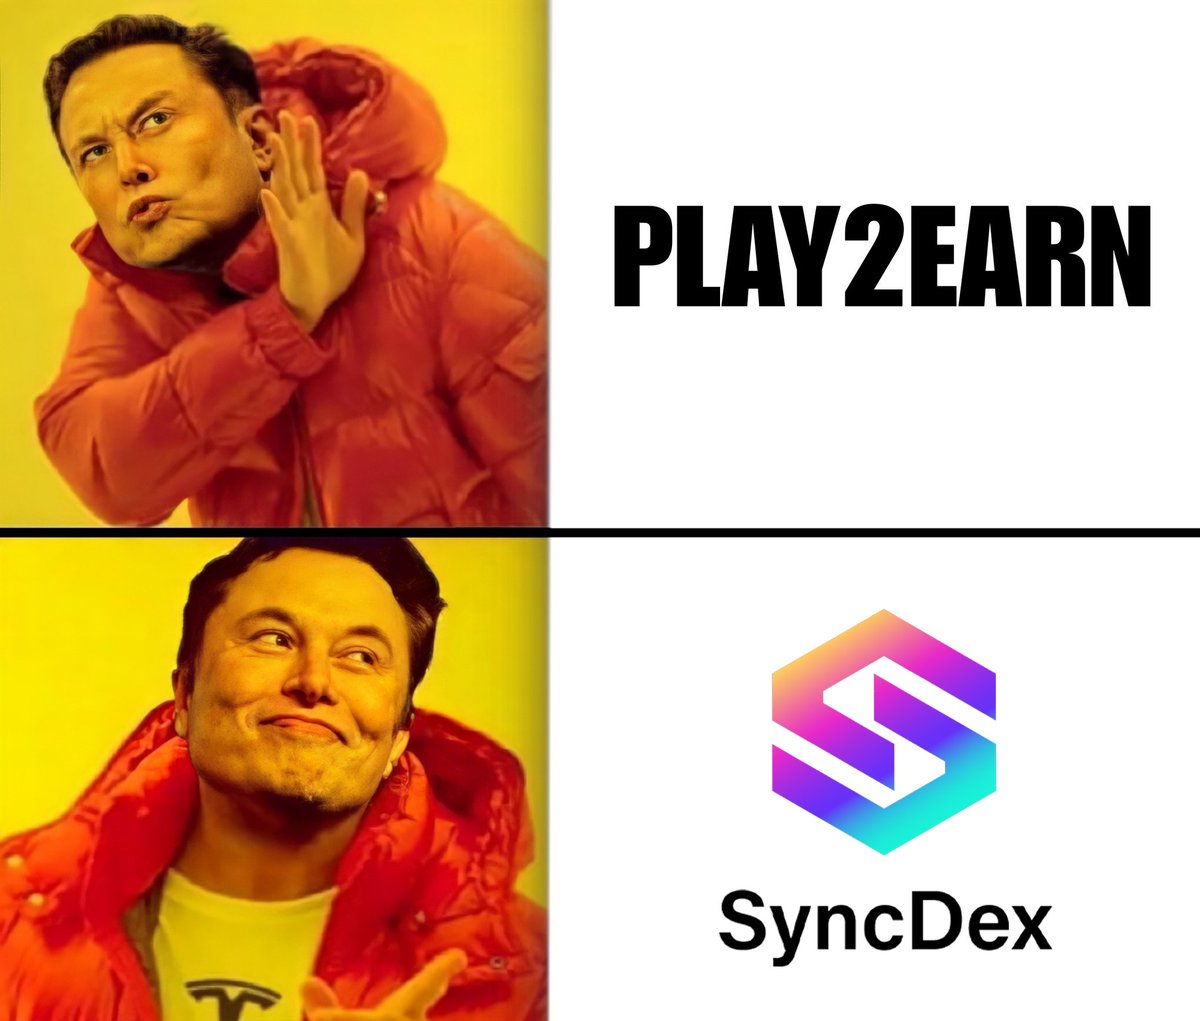 #SyncDex #SND  and mention @Sync_Dex

x.com/coinmarketcap